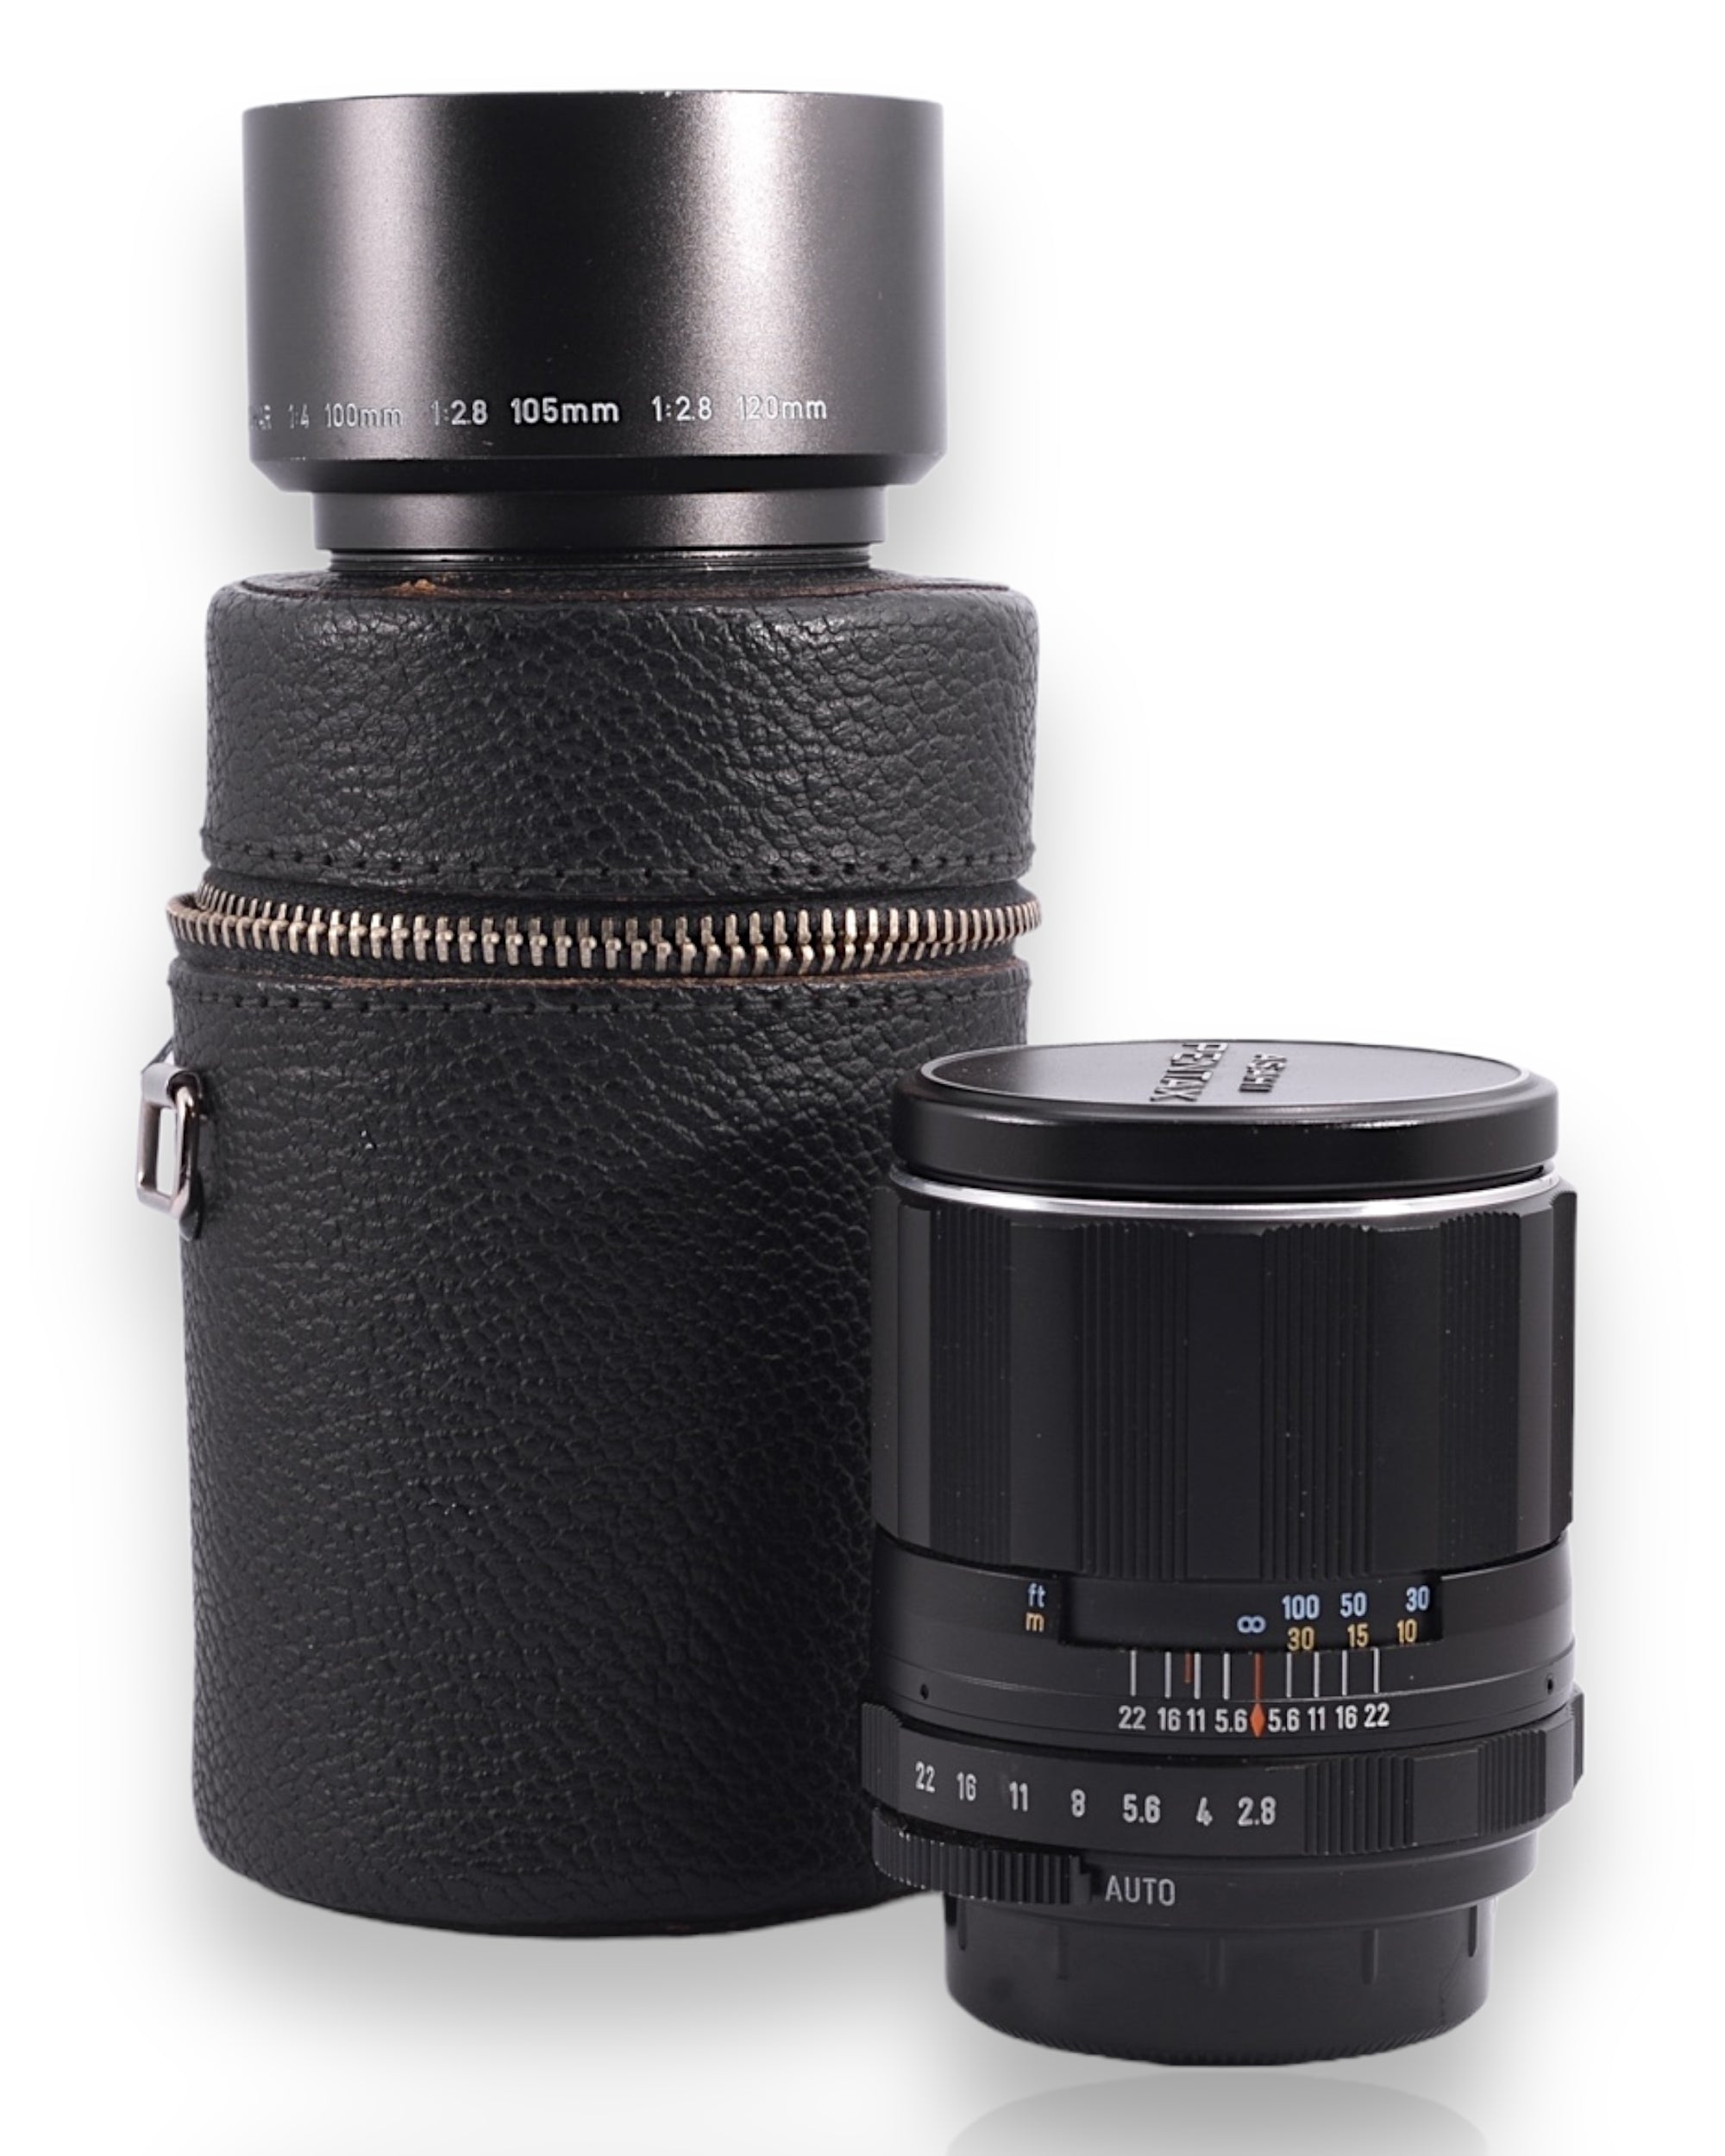 Super-Takumar 105mm f2.8 M42 lens